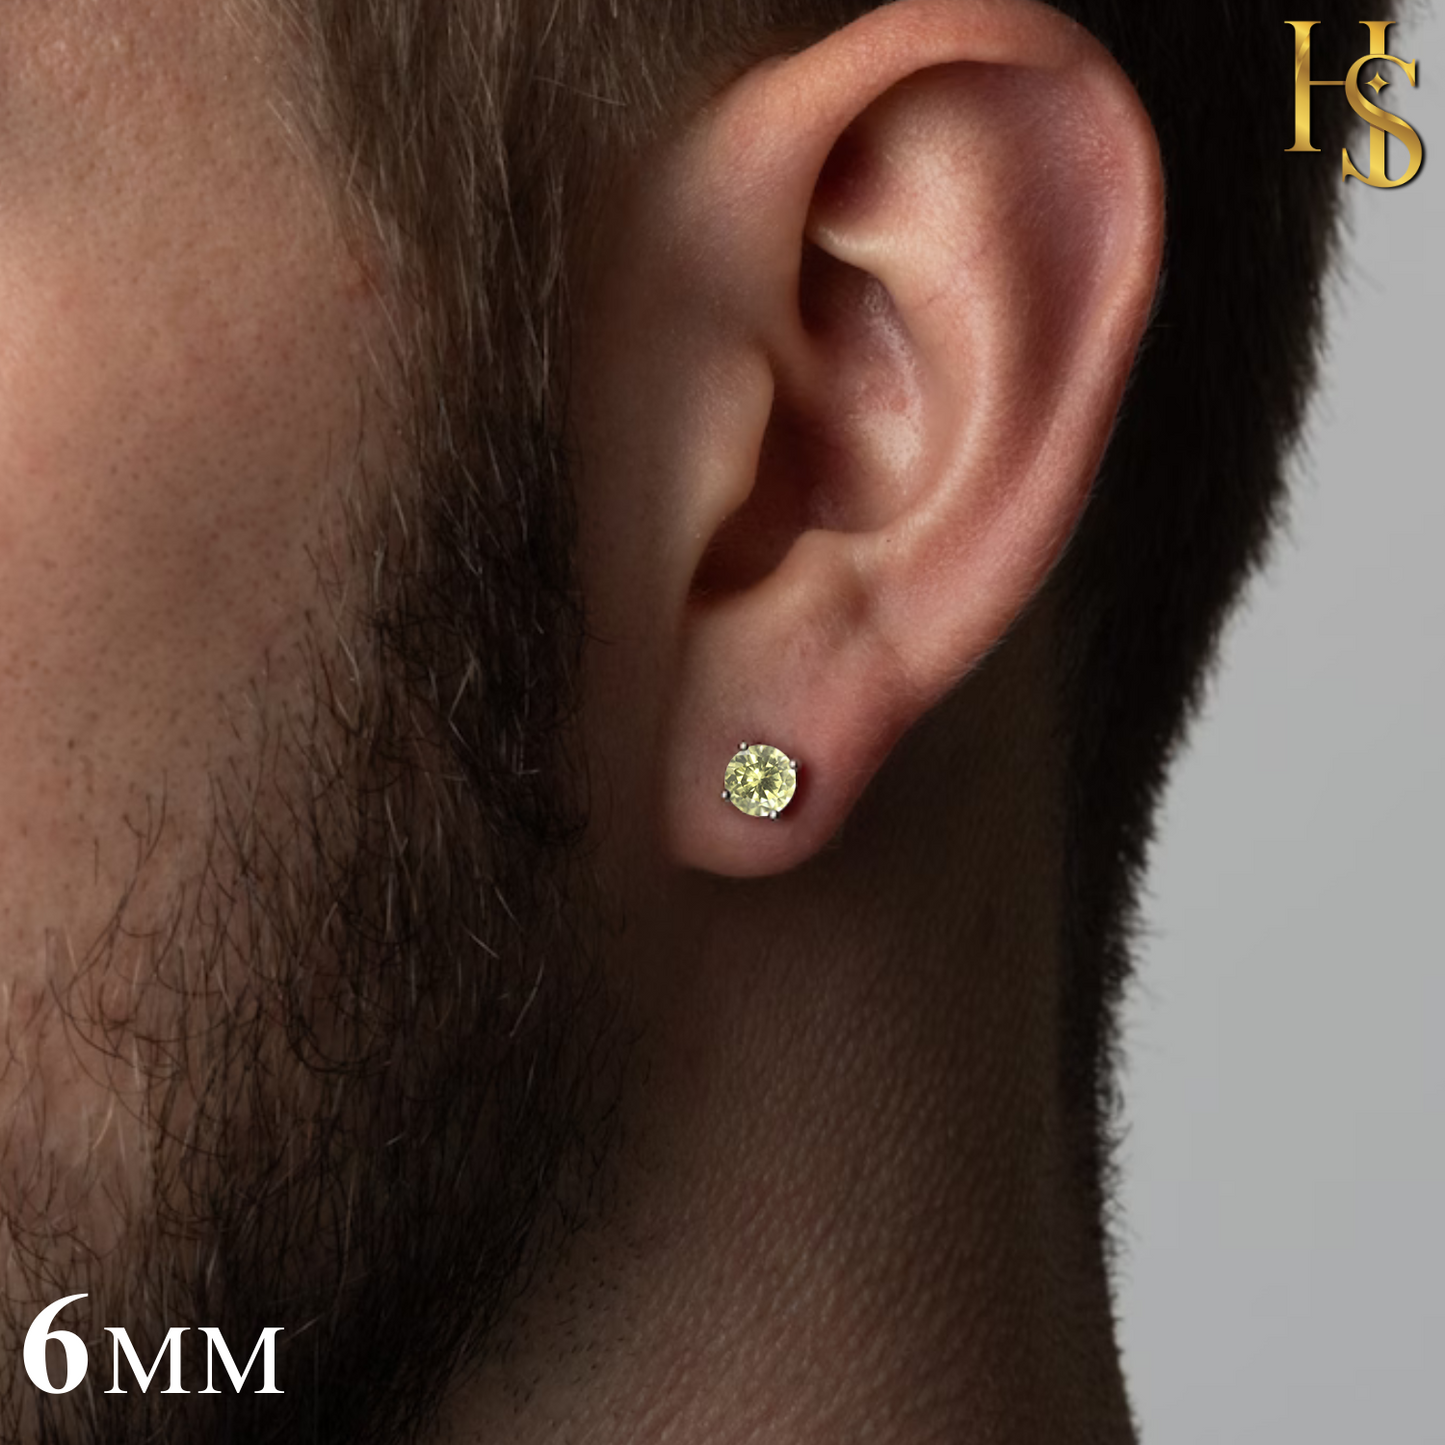 Men's Solitaire Stud Earring - 925 Silver - Birthstone August Peridot Zirconia - 1 Piece